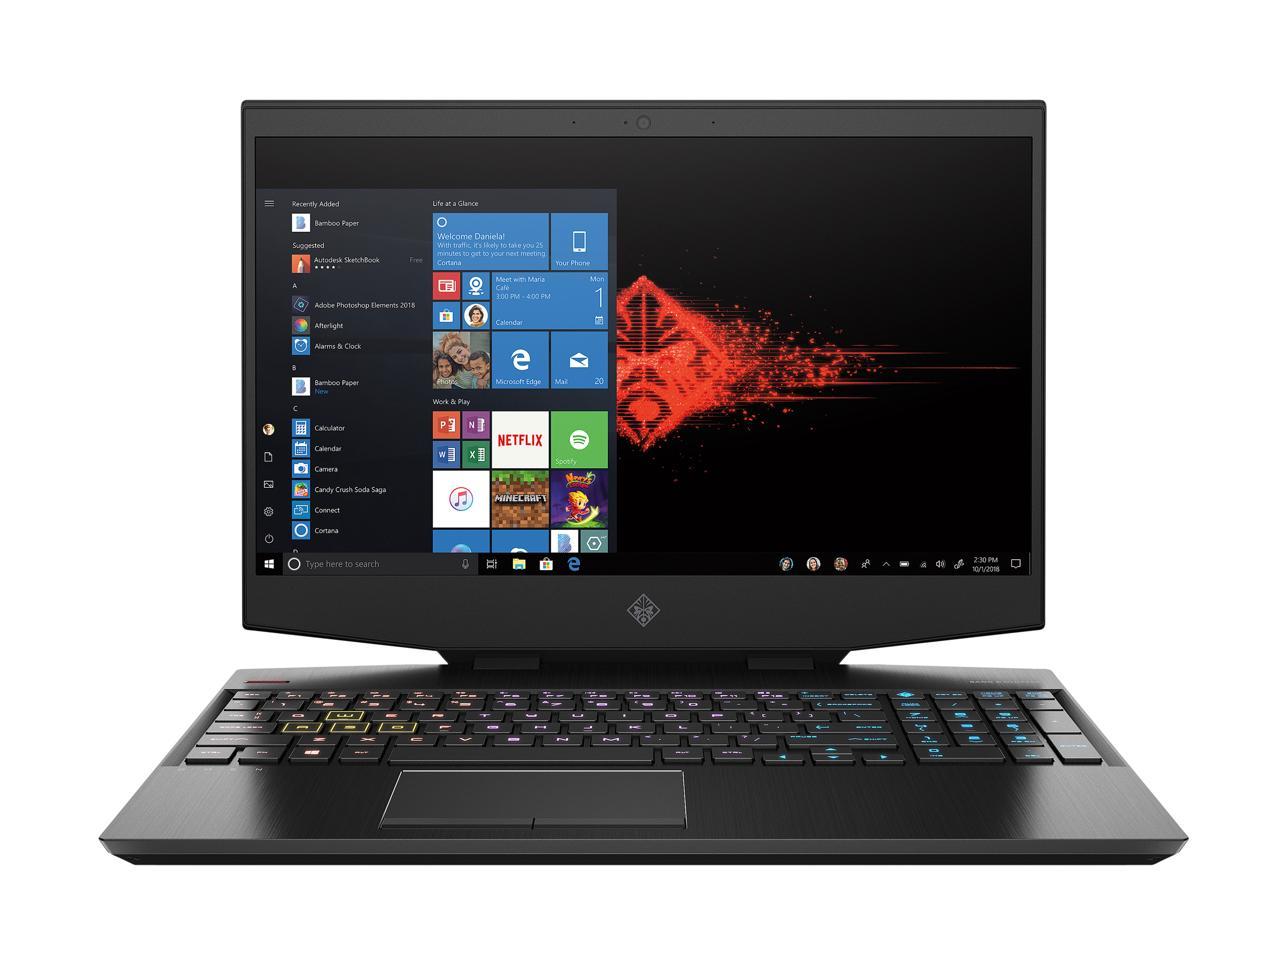 HP OMEN 15 (2020) - 15.6" FHD - Intel Core i7-10750H - GeForce GTX 1660 Ti - 8 GB DDR4 - 512 GB SSD - Gaming Laptop (15-dh1020nr)